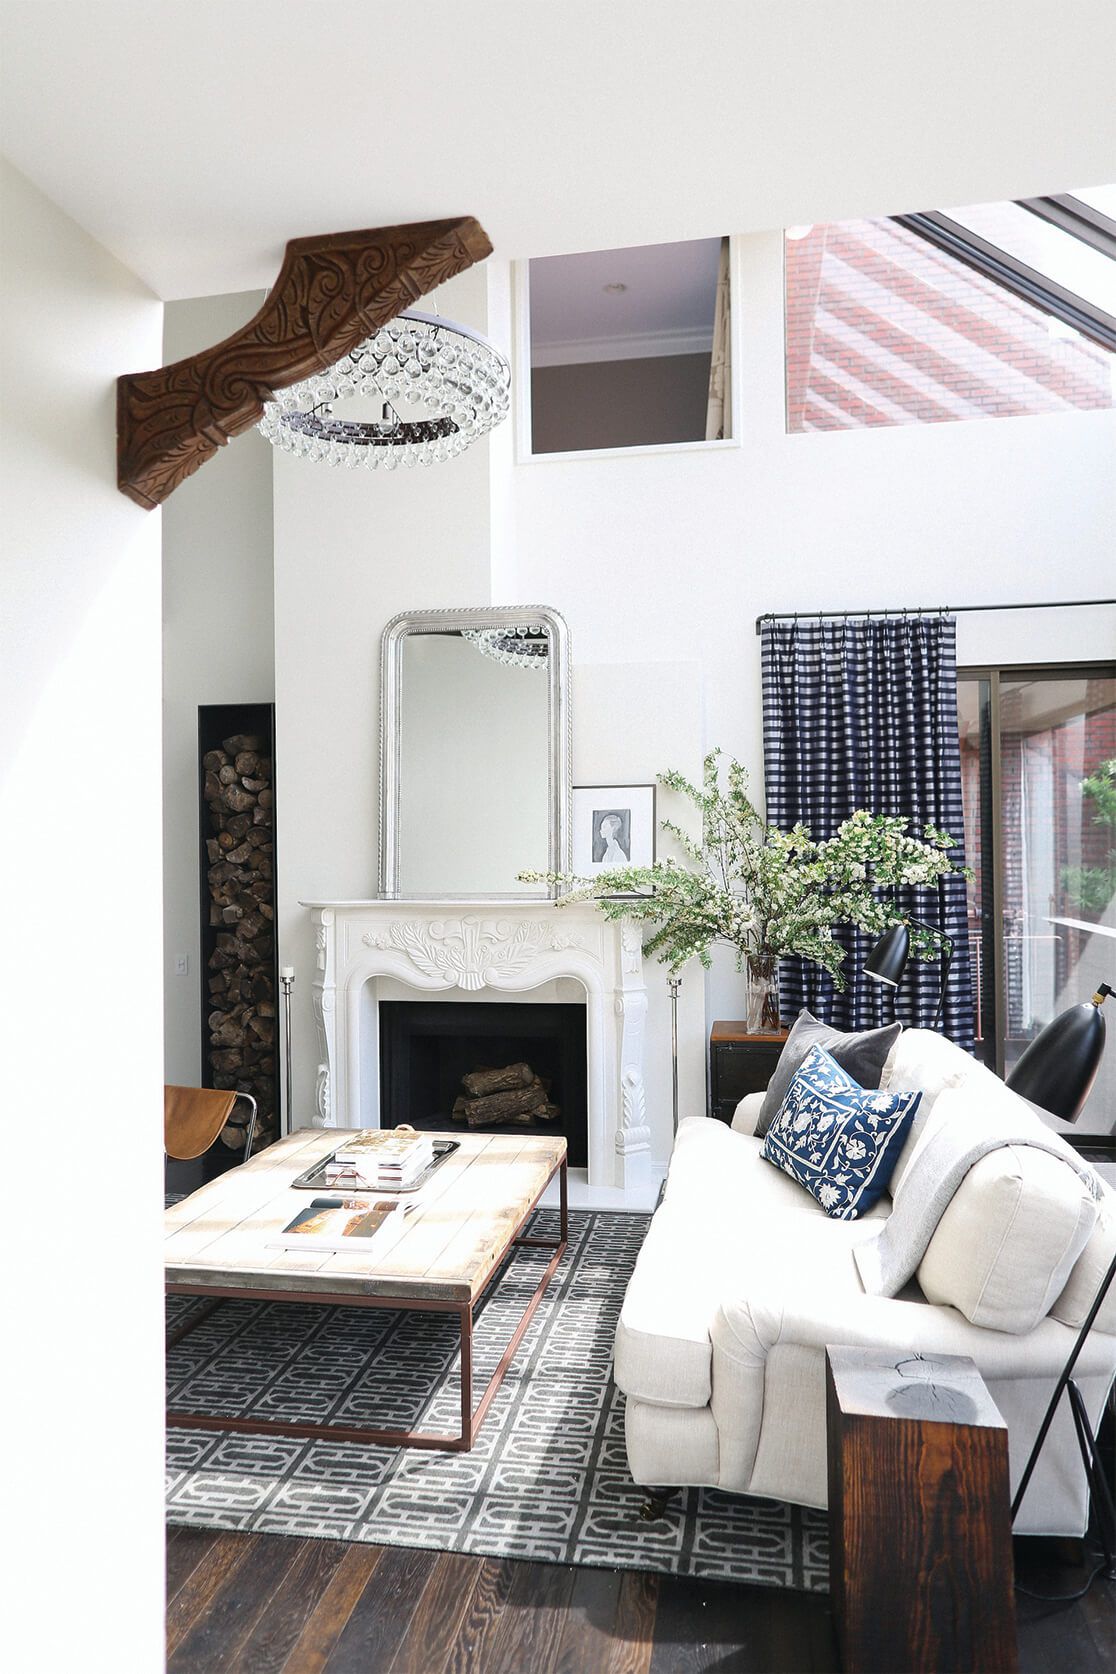 45 Best Fireplace Ideas - Stylish Indoor Fireplace Designs, Decor